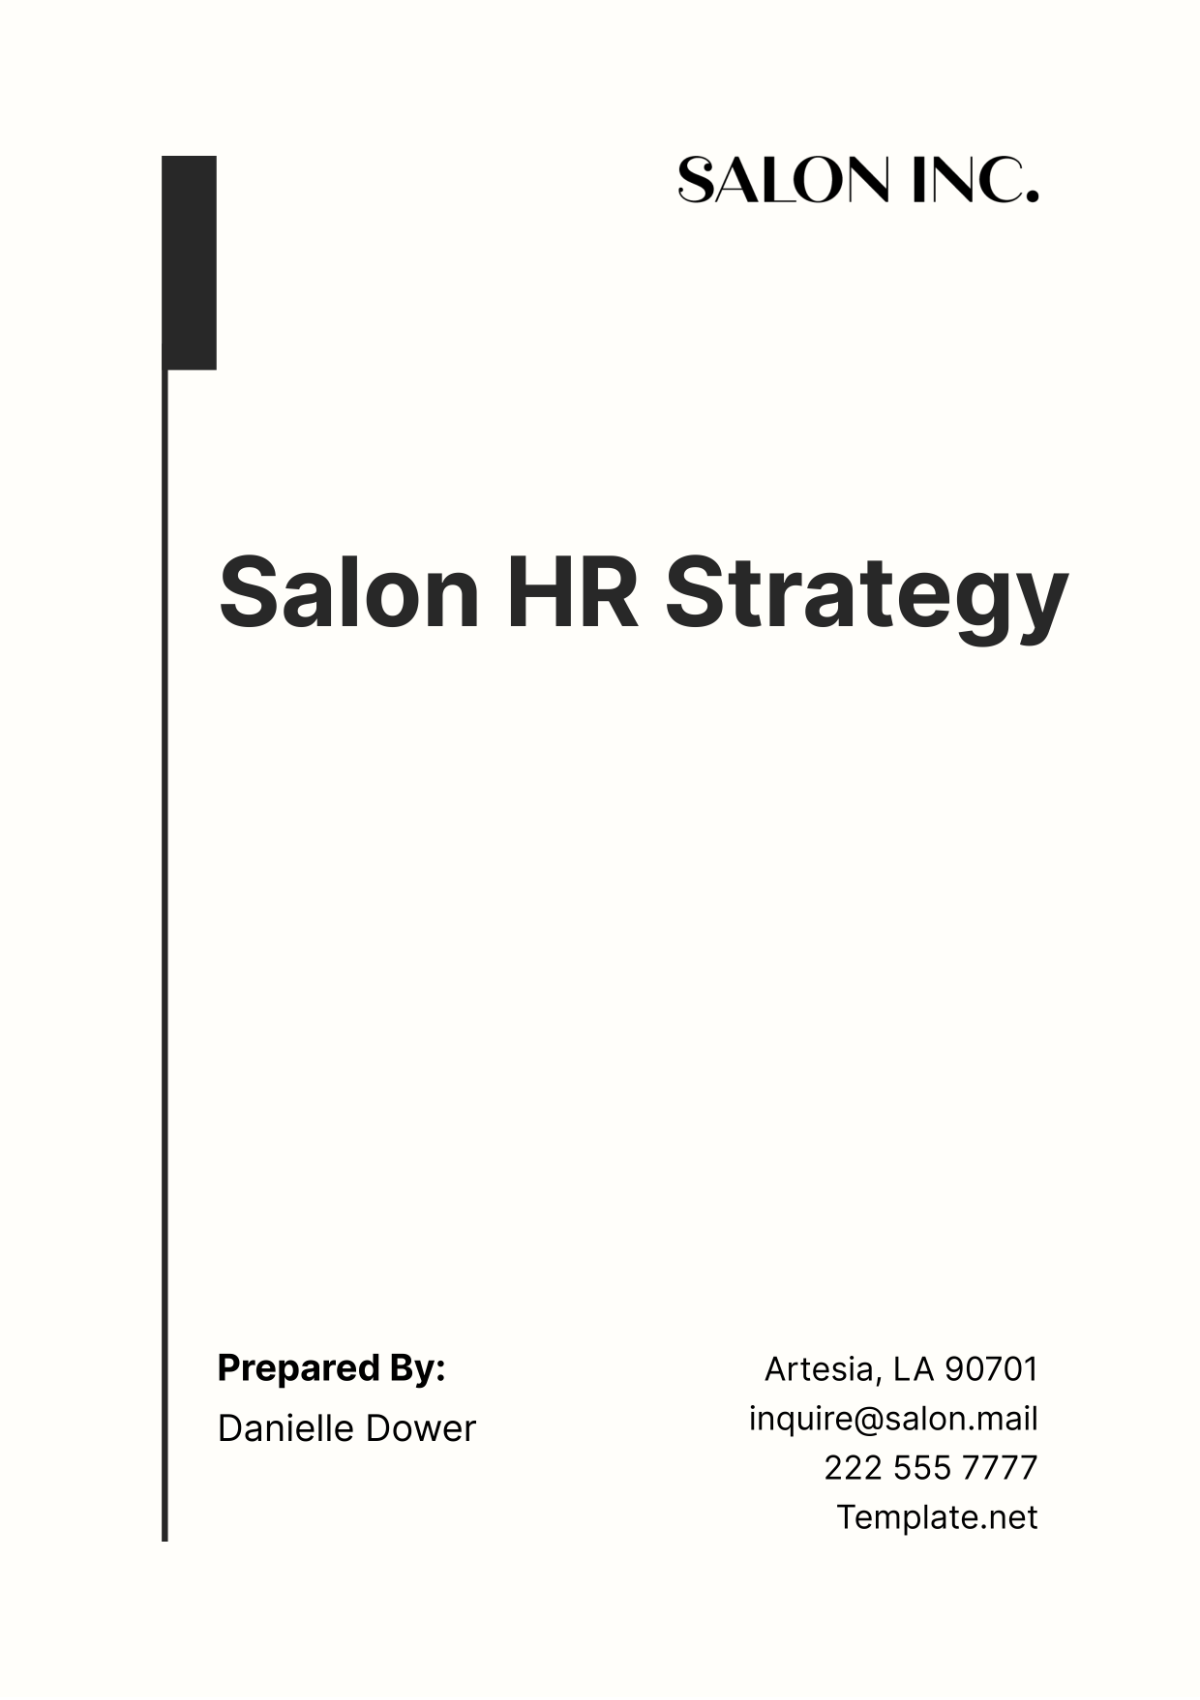 Salon HR Strategy Template